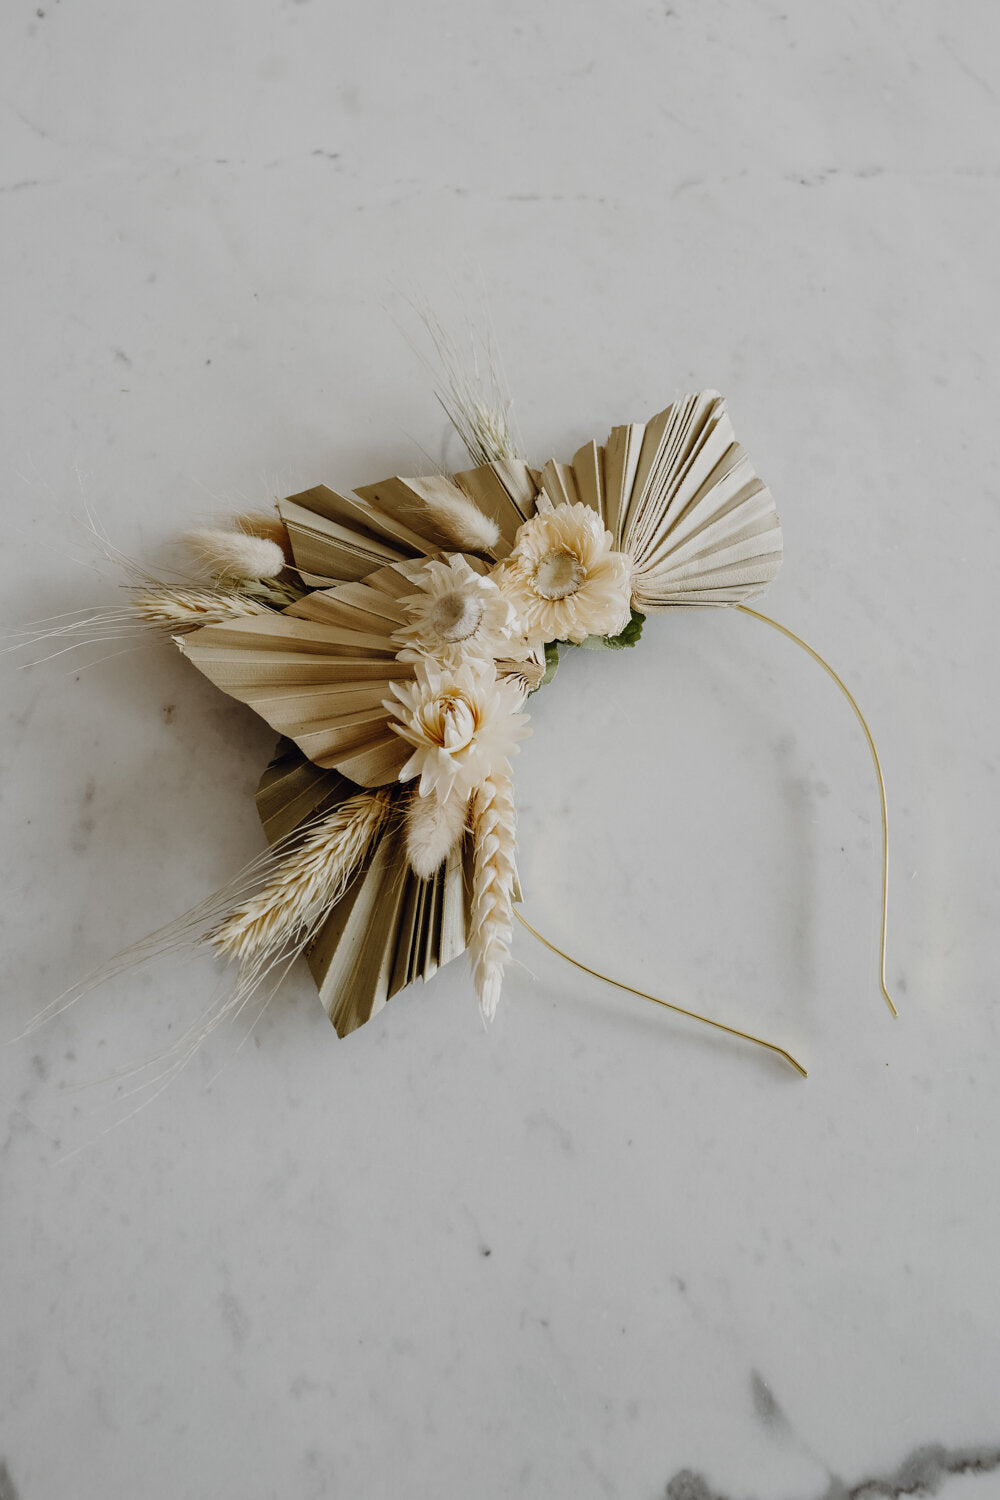 Laura Handmade Dried Flower Headpiece